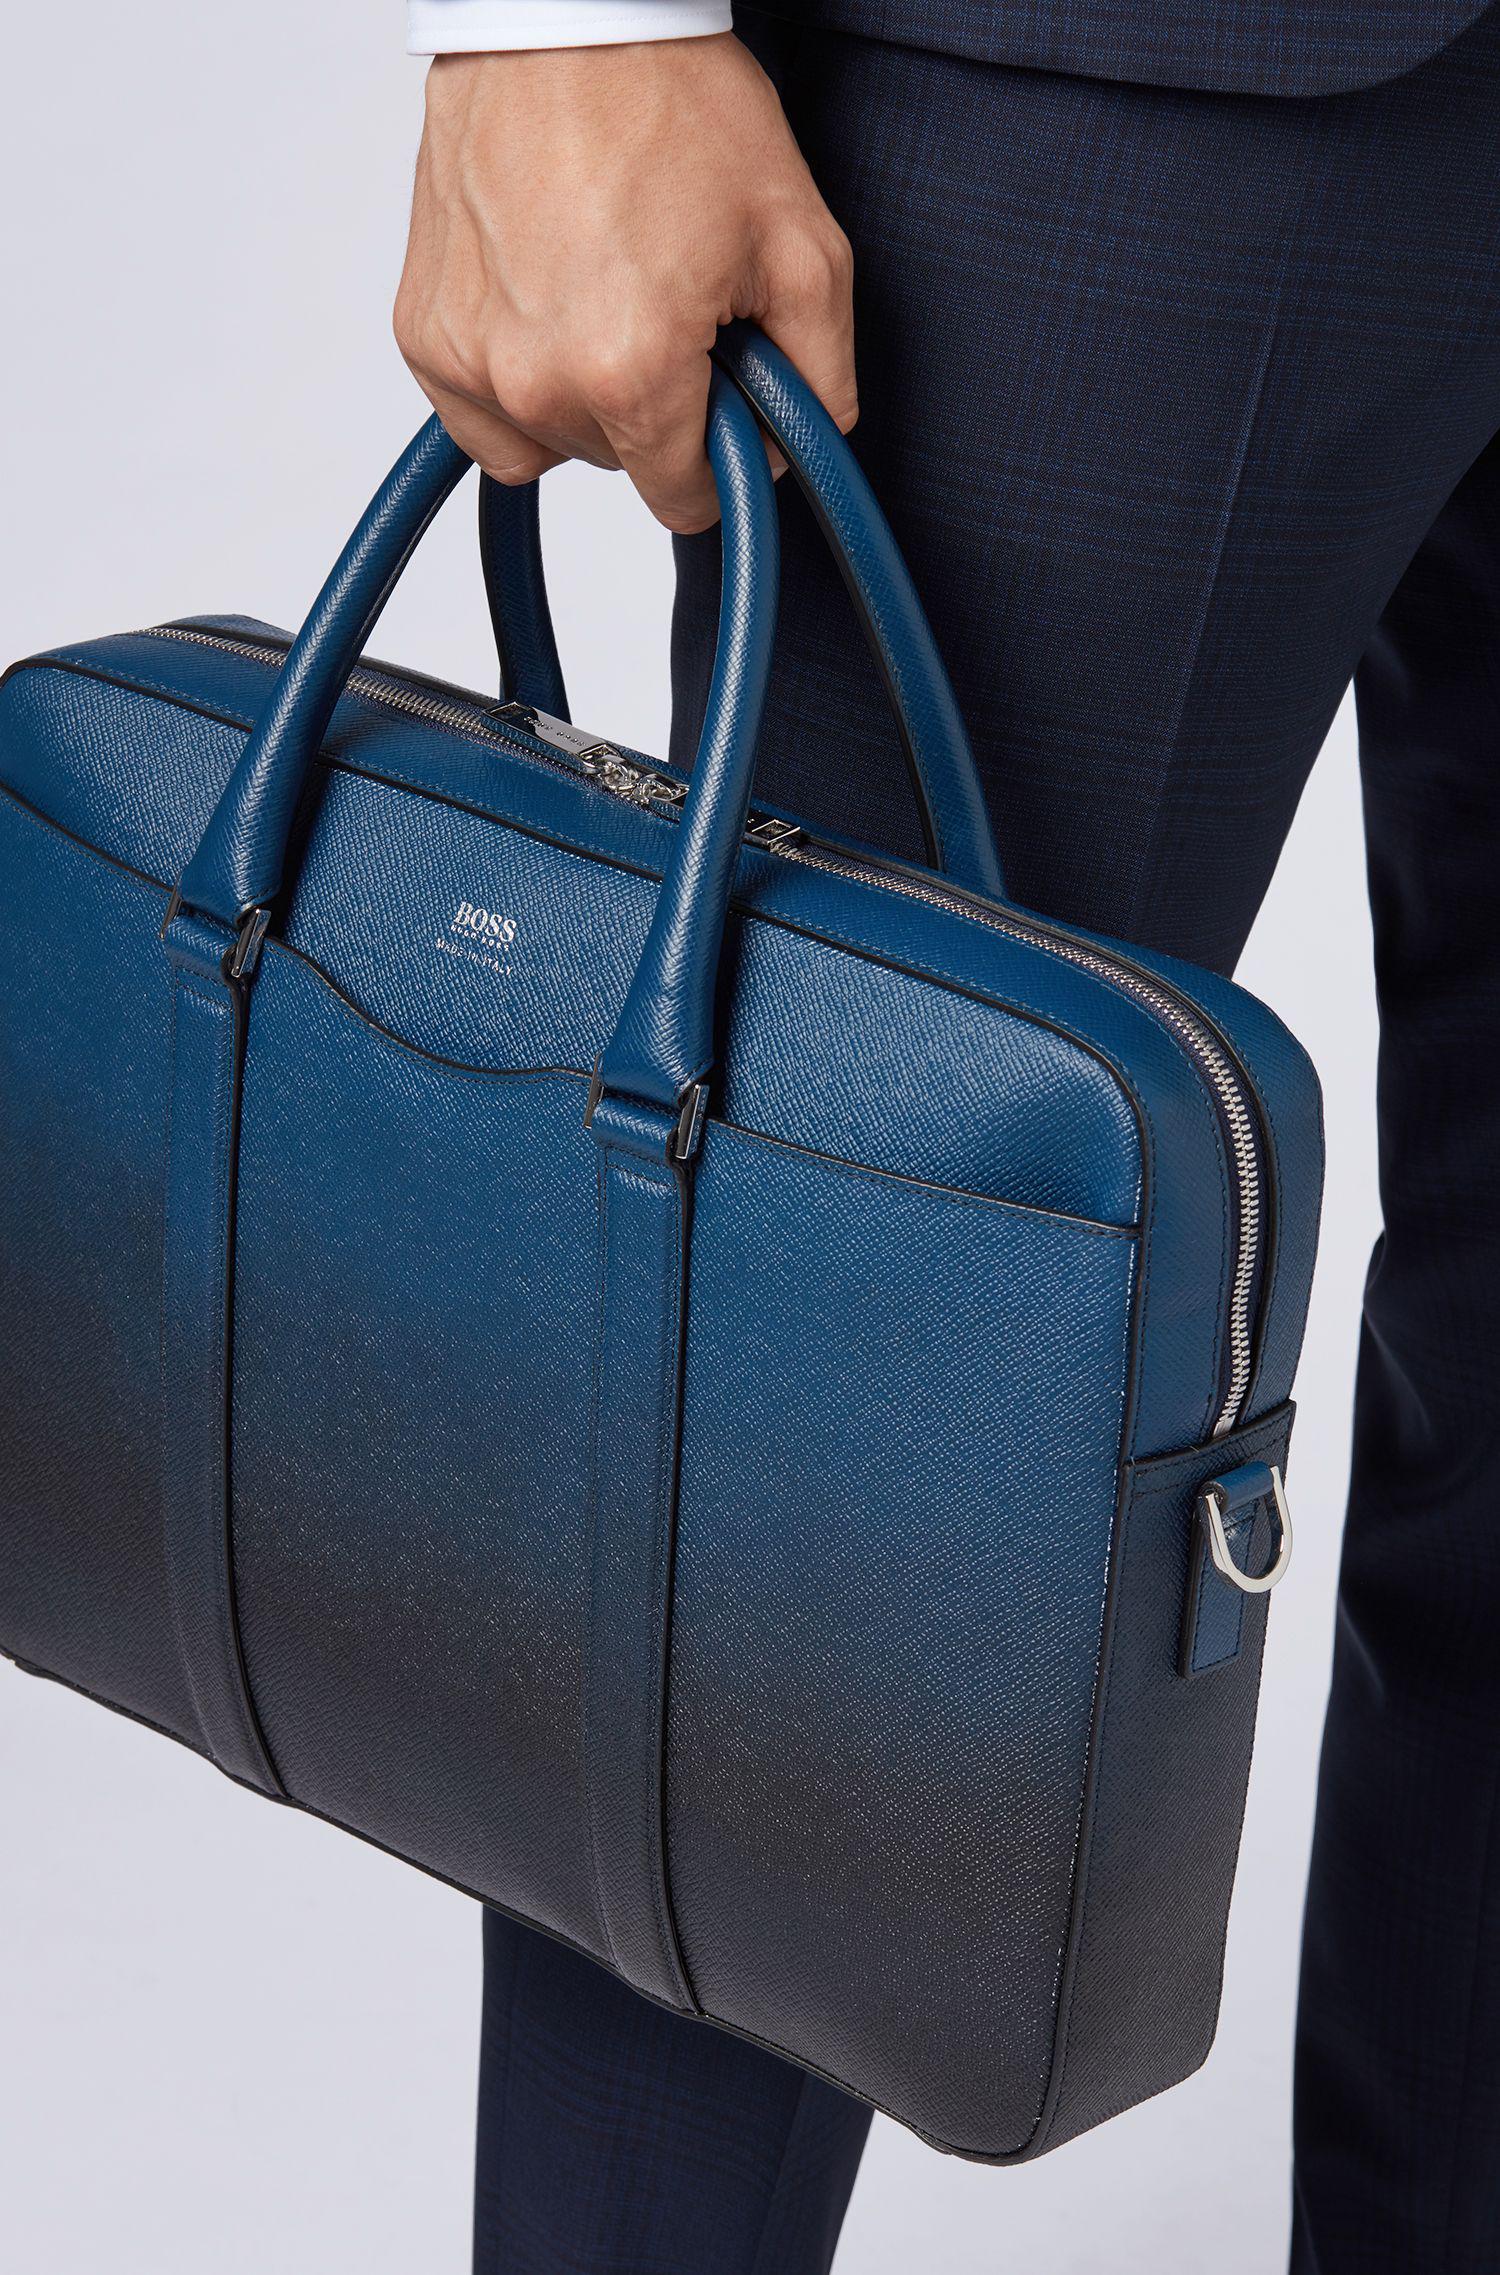 procedure pint Fodgænger Hugo Boss Leather Bags Deals, SAVE 50% - fearthemecca.com